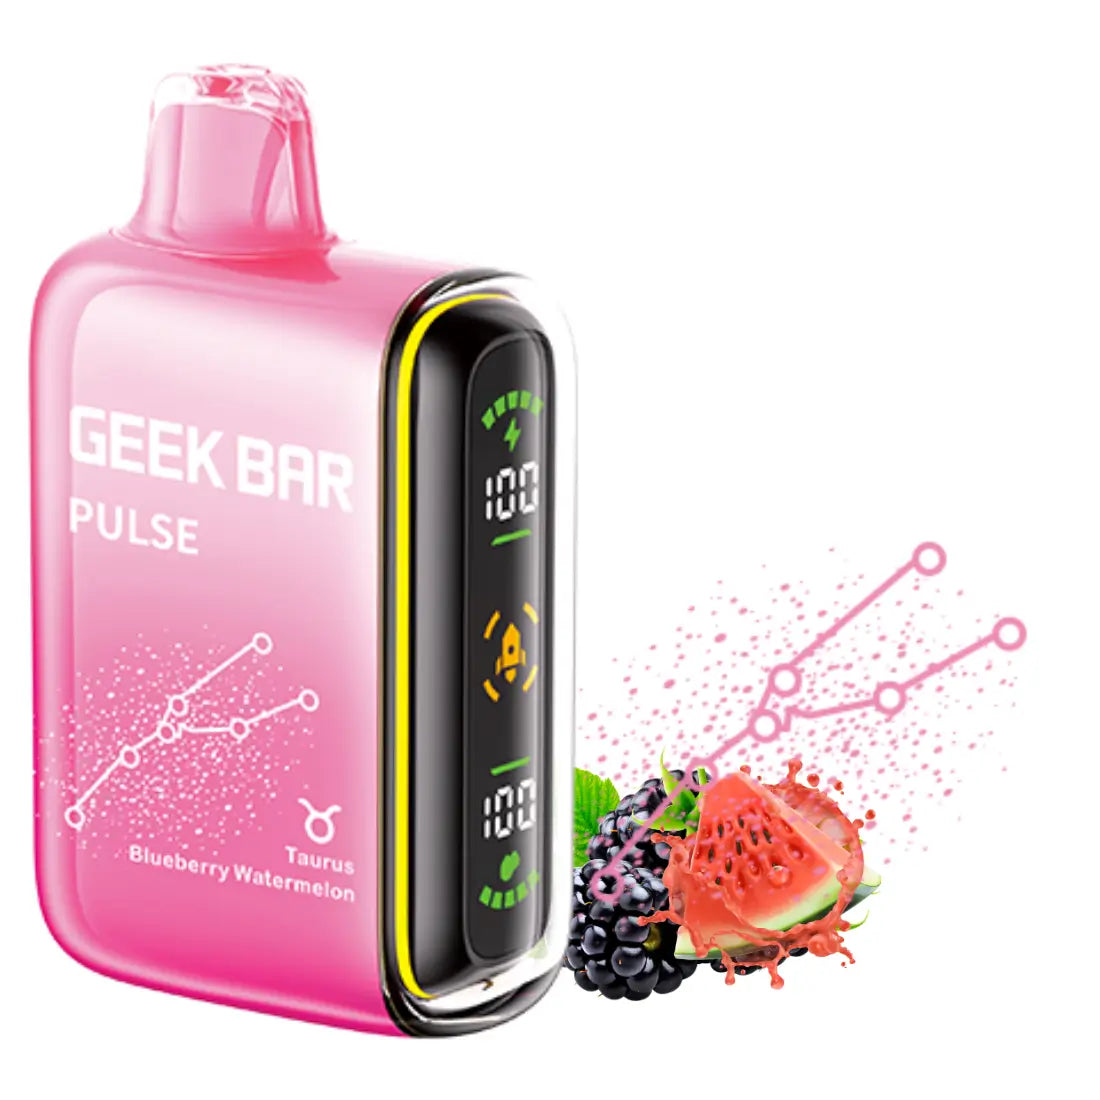 Geek Bar Pulse Las Vegas Blueberry Watermelon